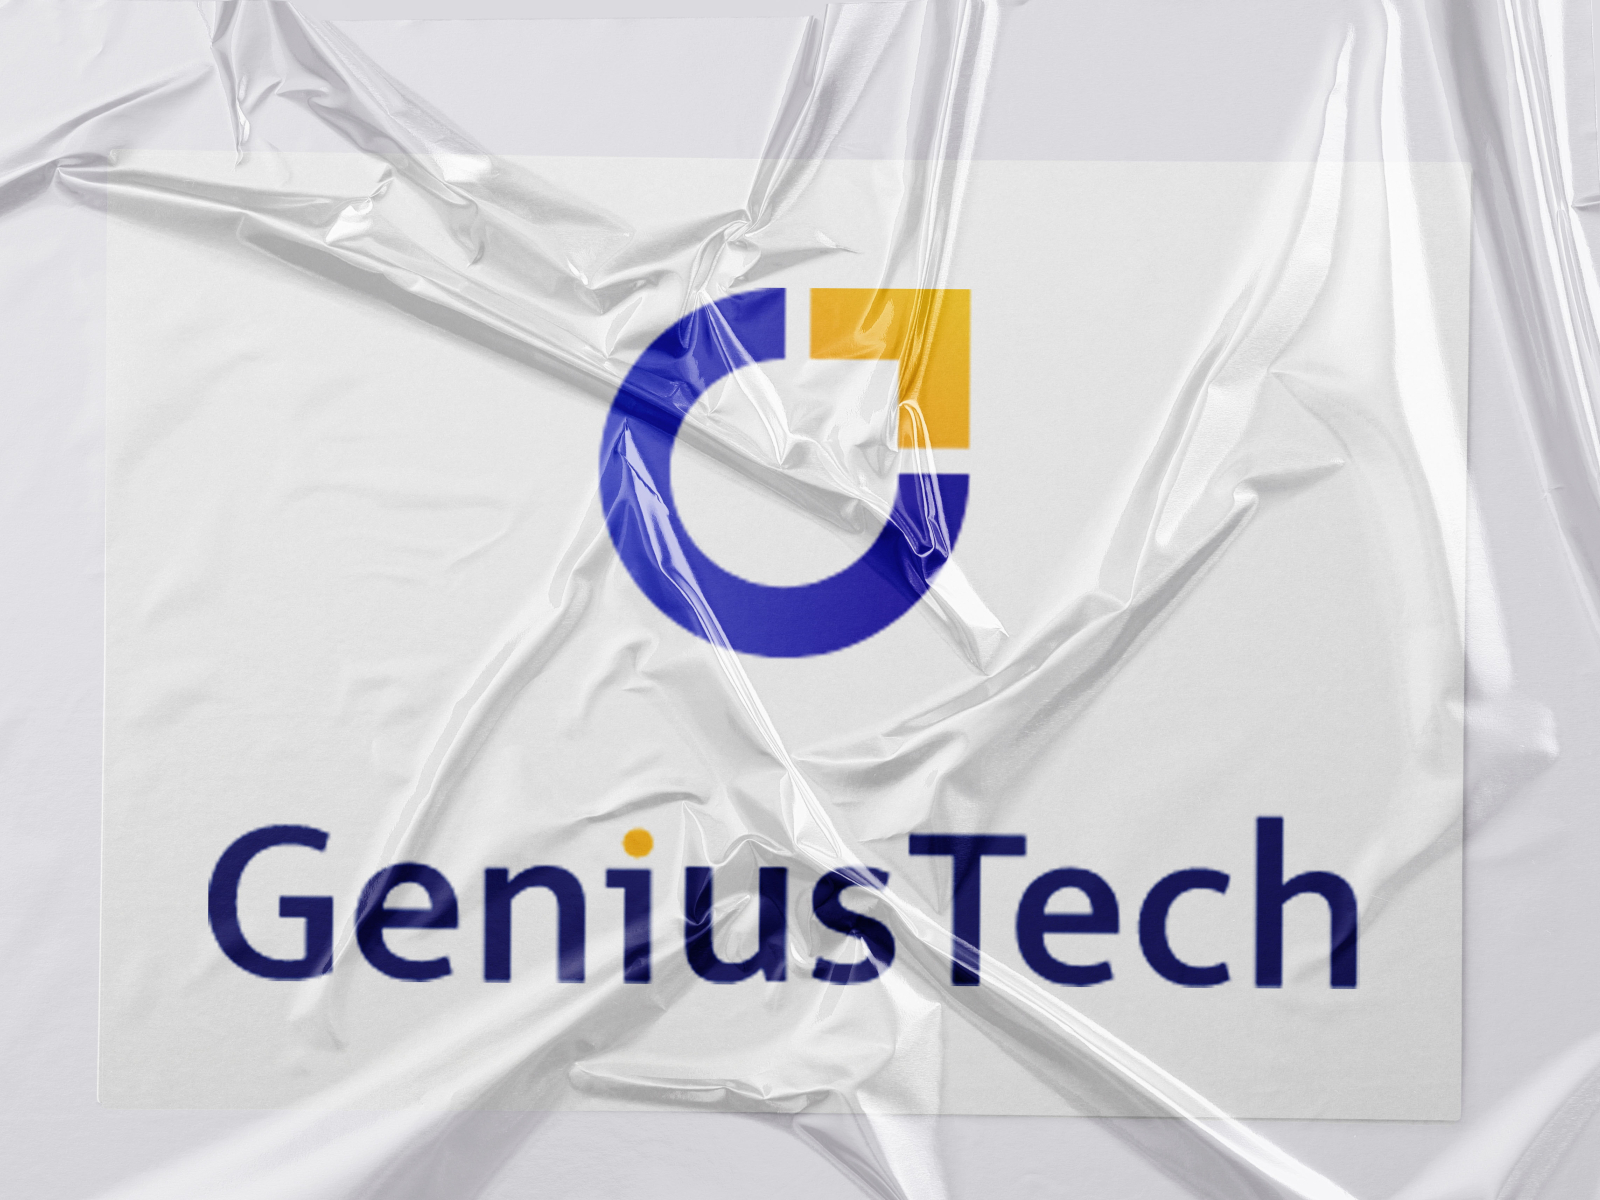 ConsumerDirect Mortgage Announces Rebrand to “Real Genius” | Business Wire